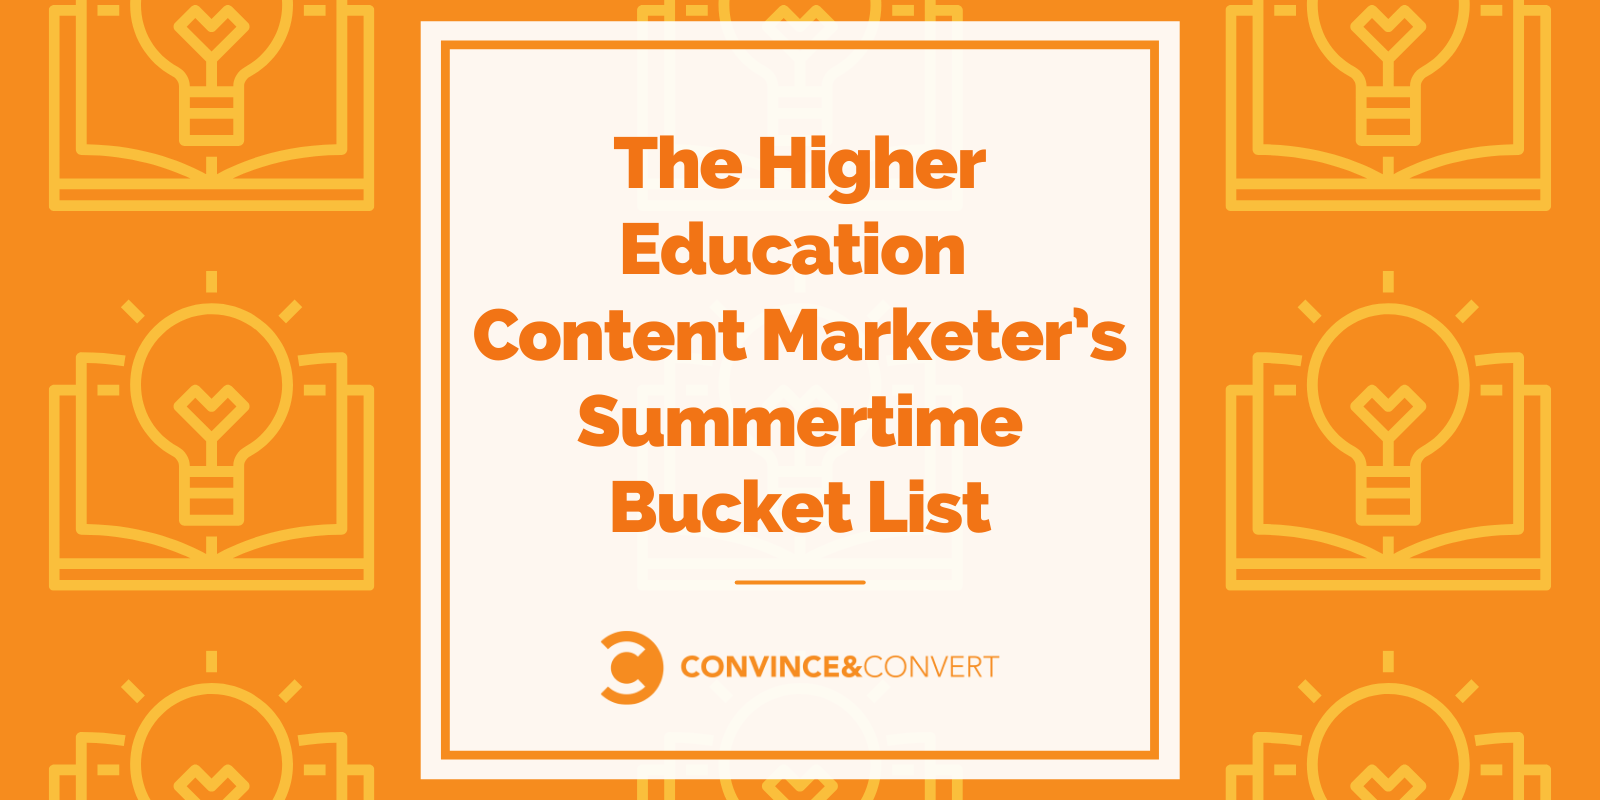 The Higher Education Content Marketer’s Summertime Bucket List (1)